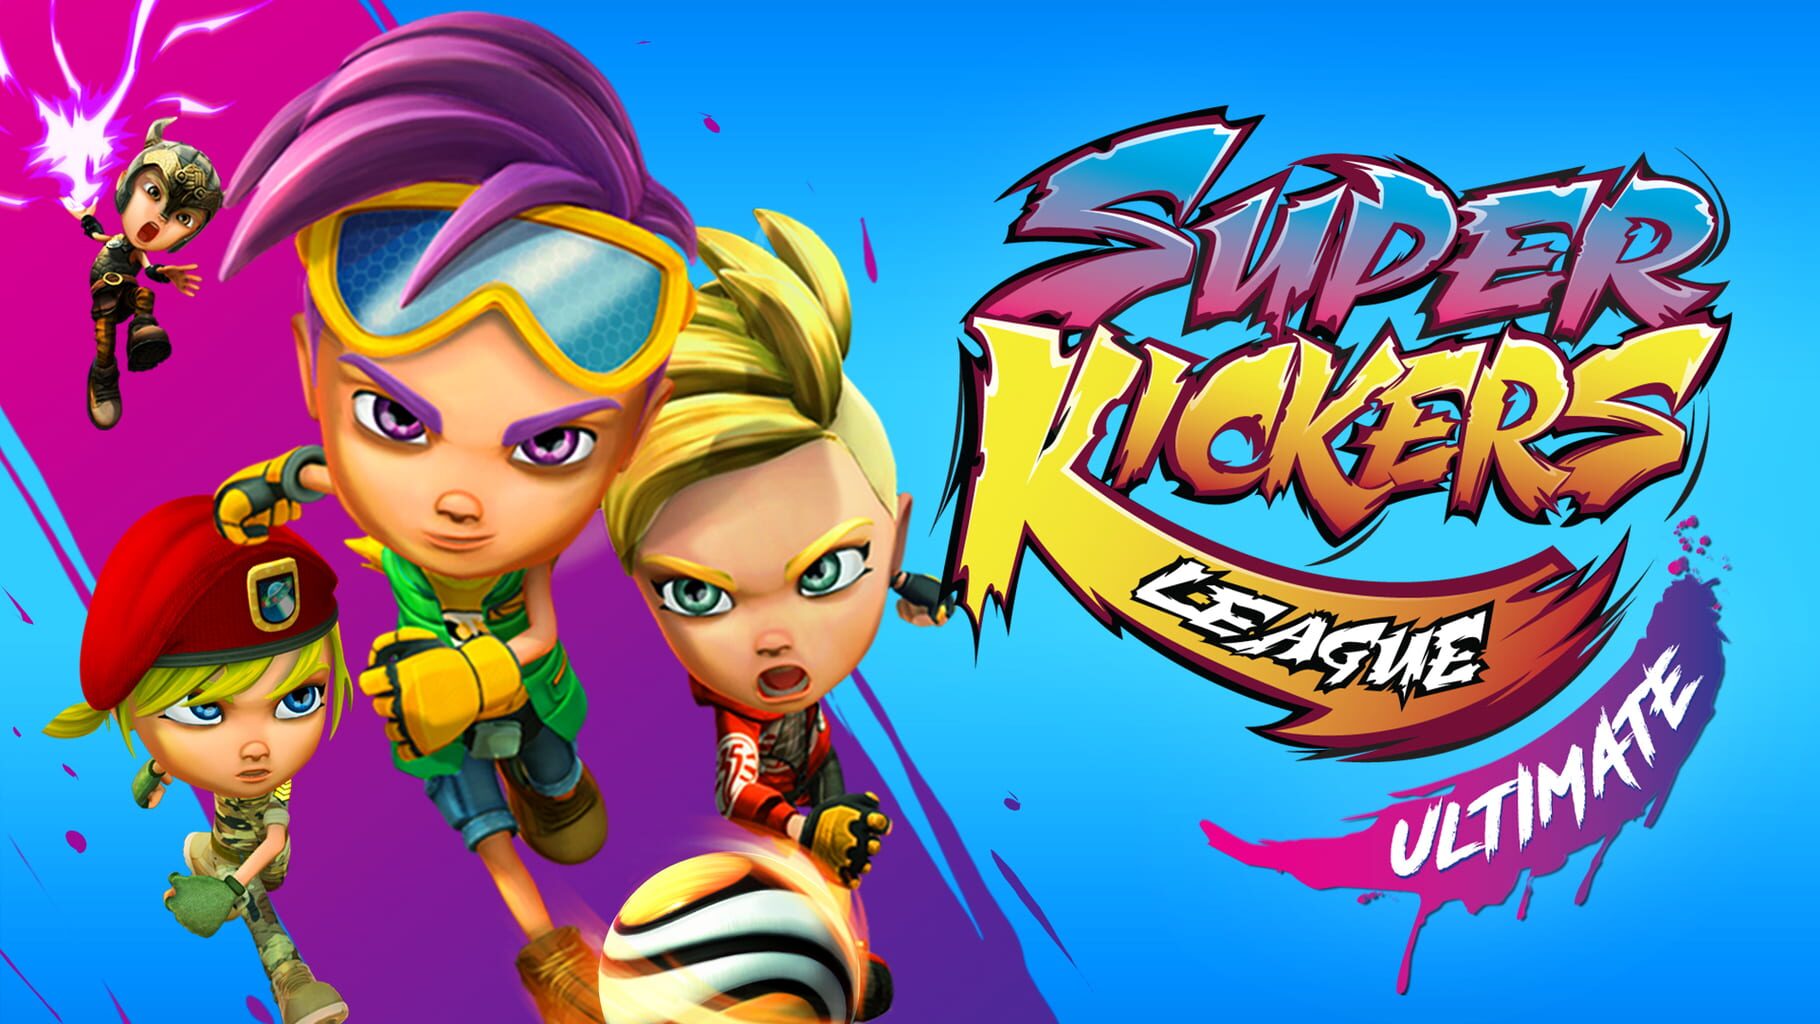 Super Kickers League Ultimate artwork